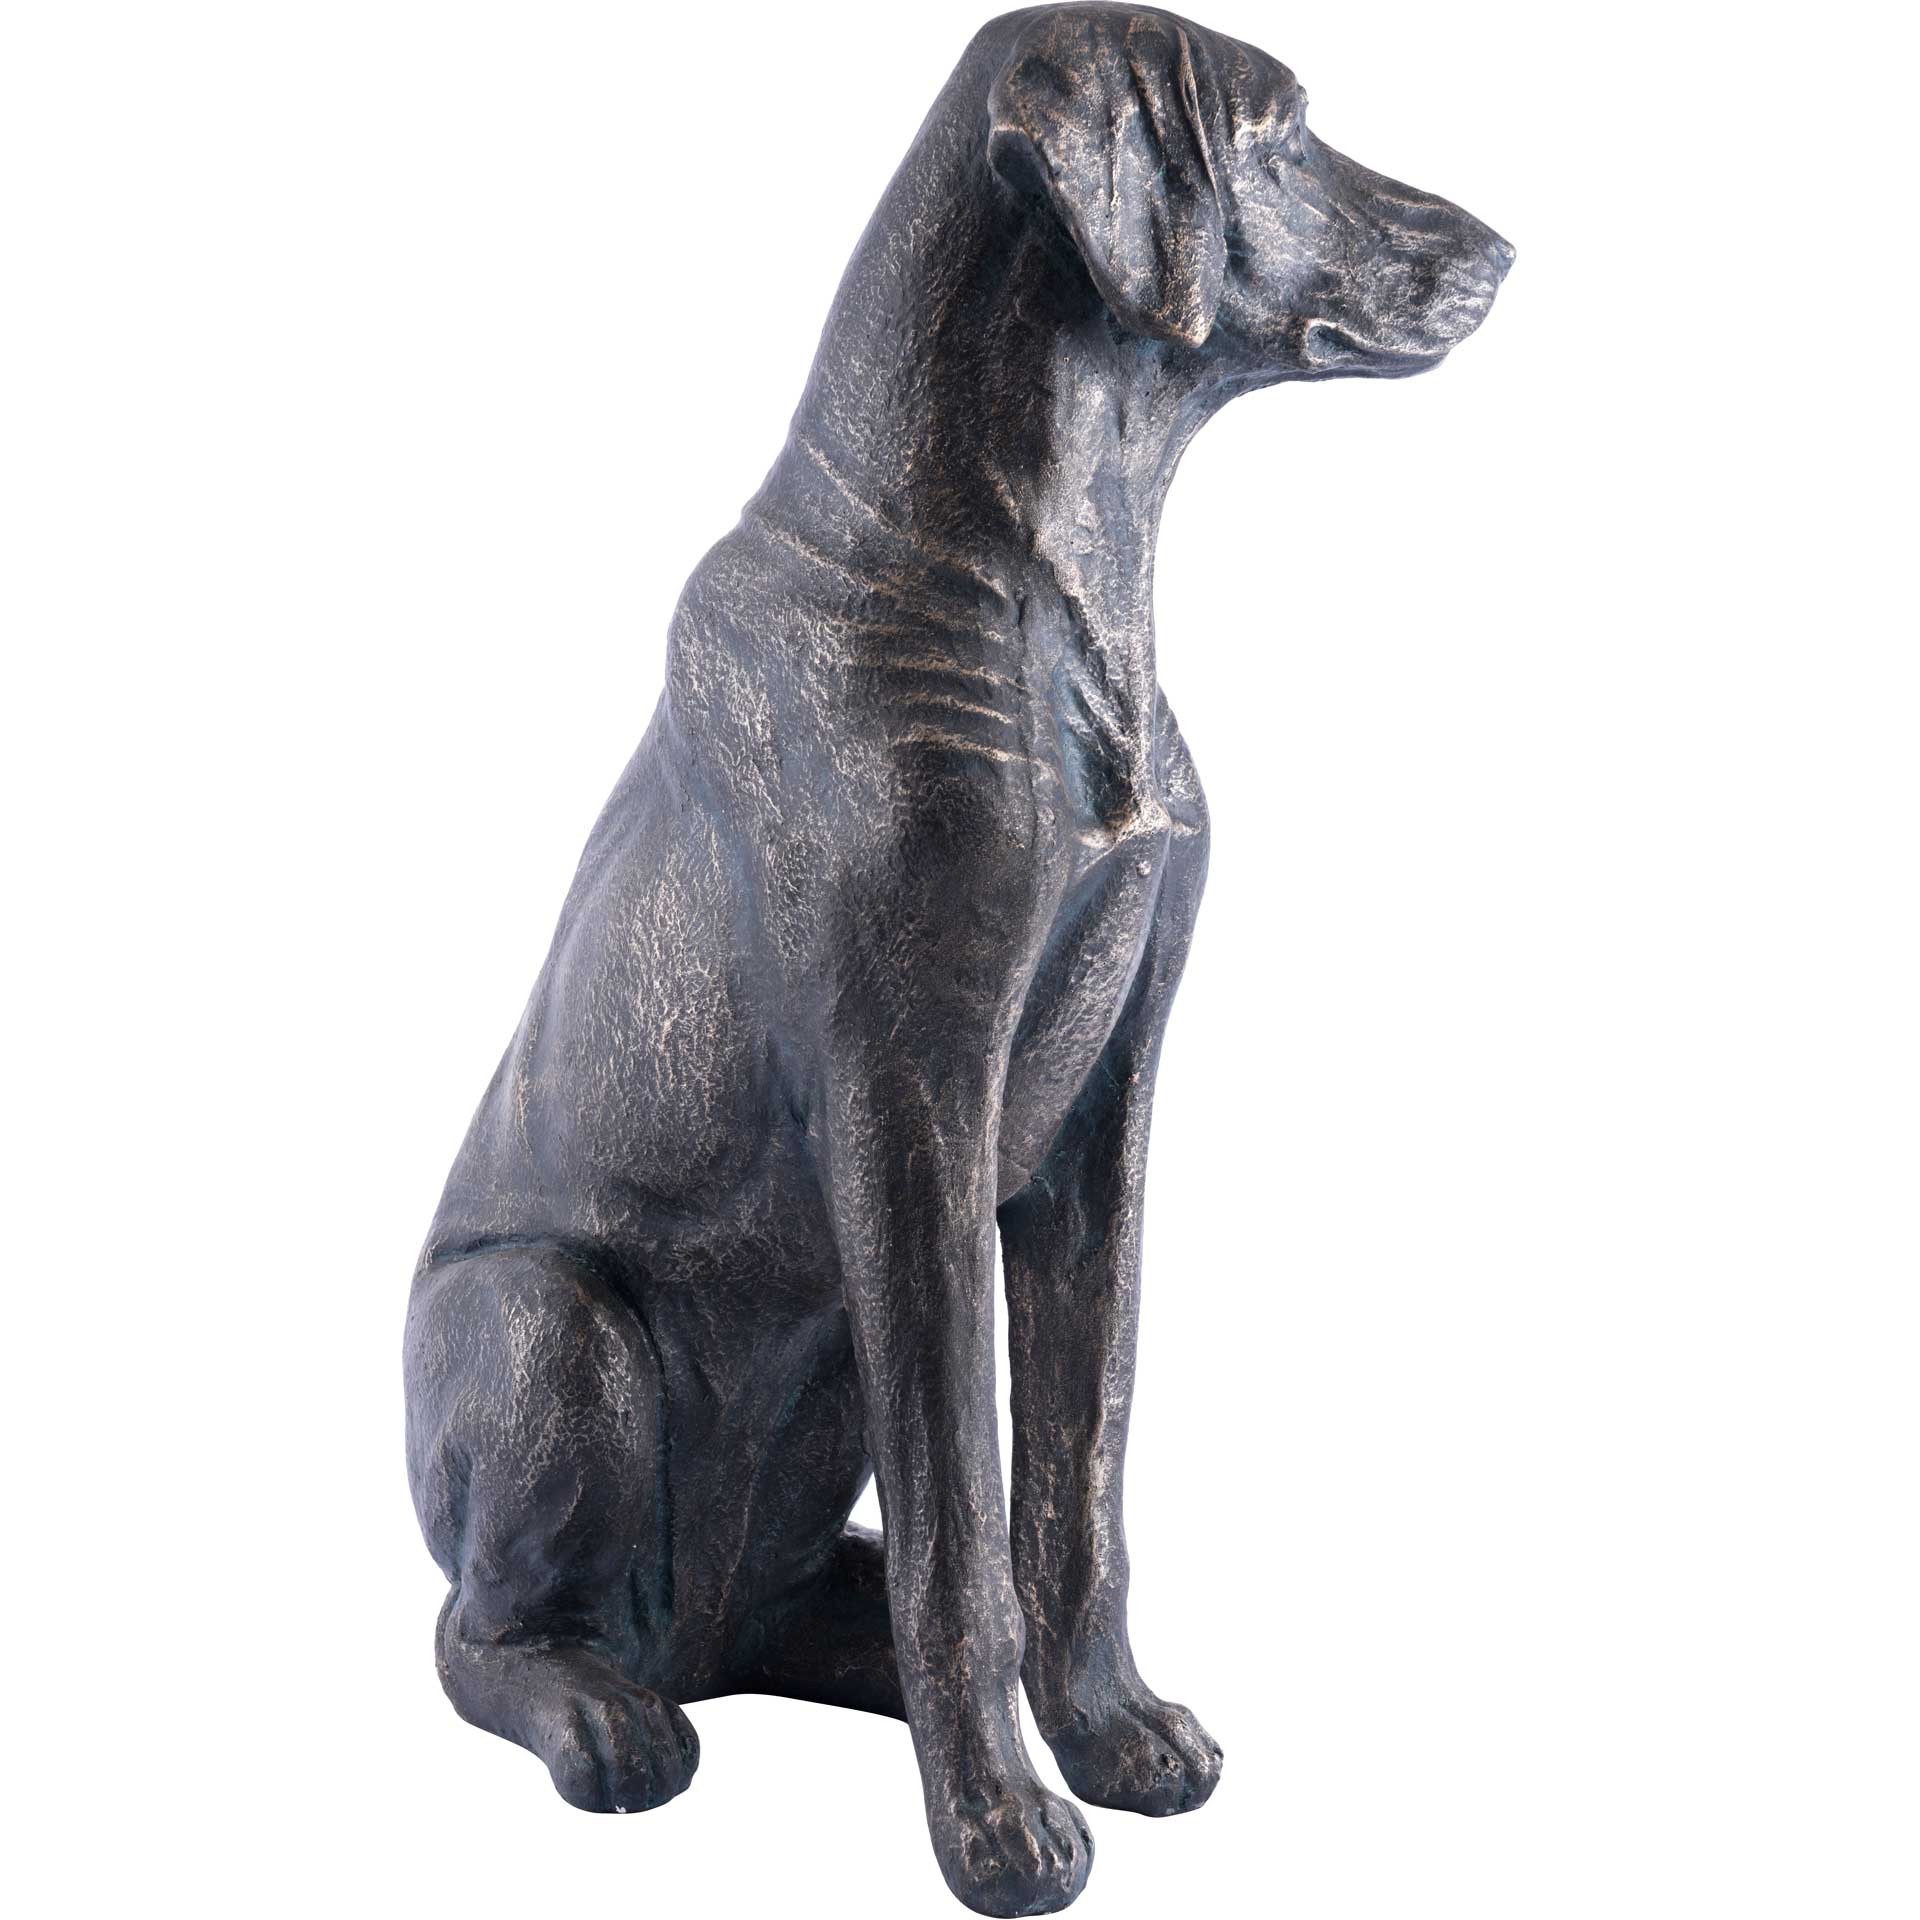 Dog Sitting Bronze